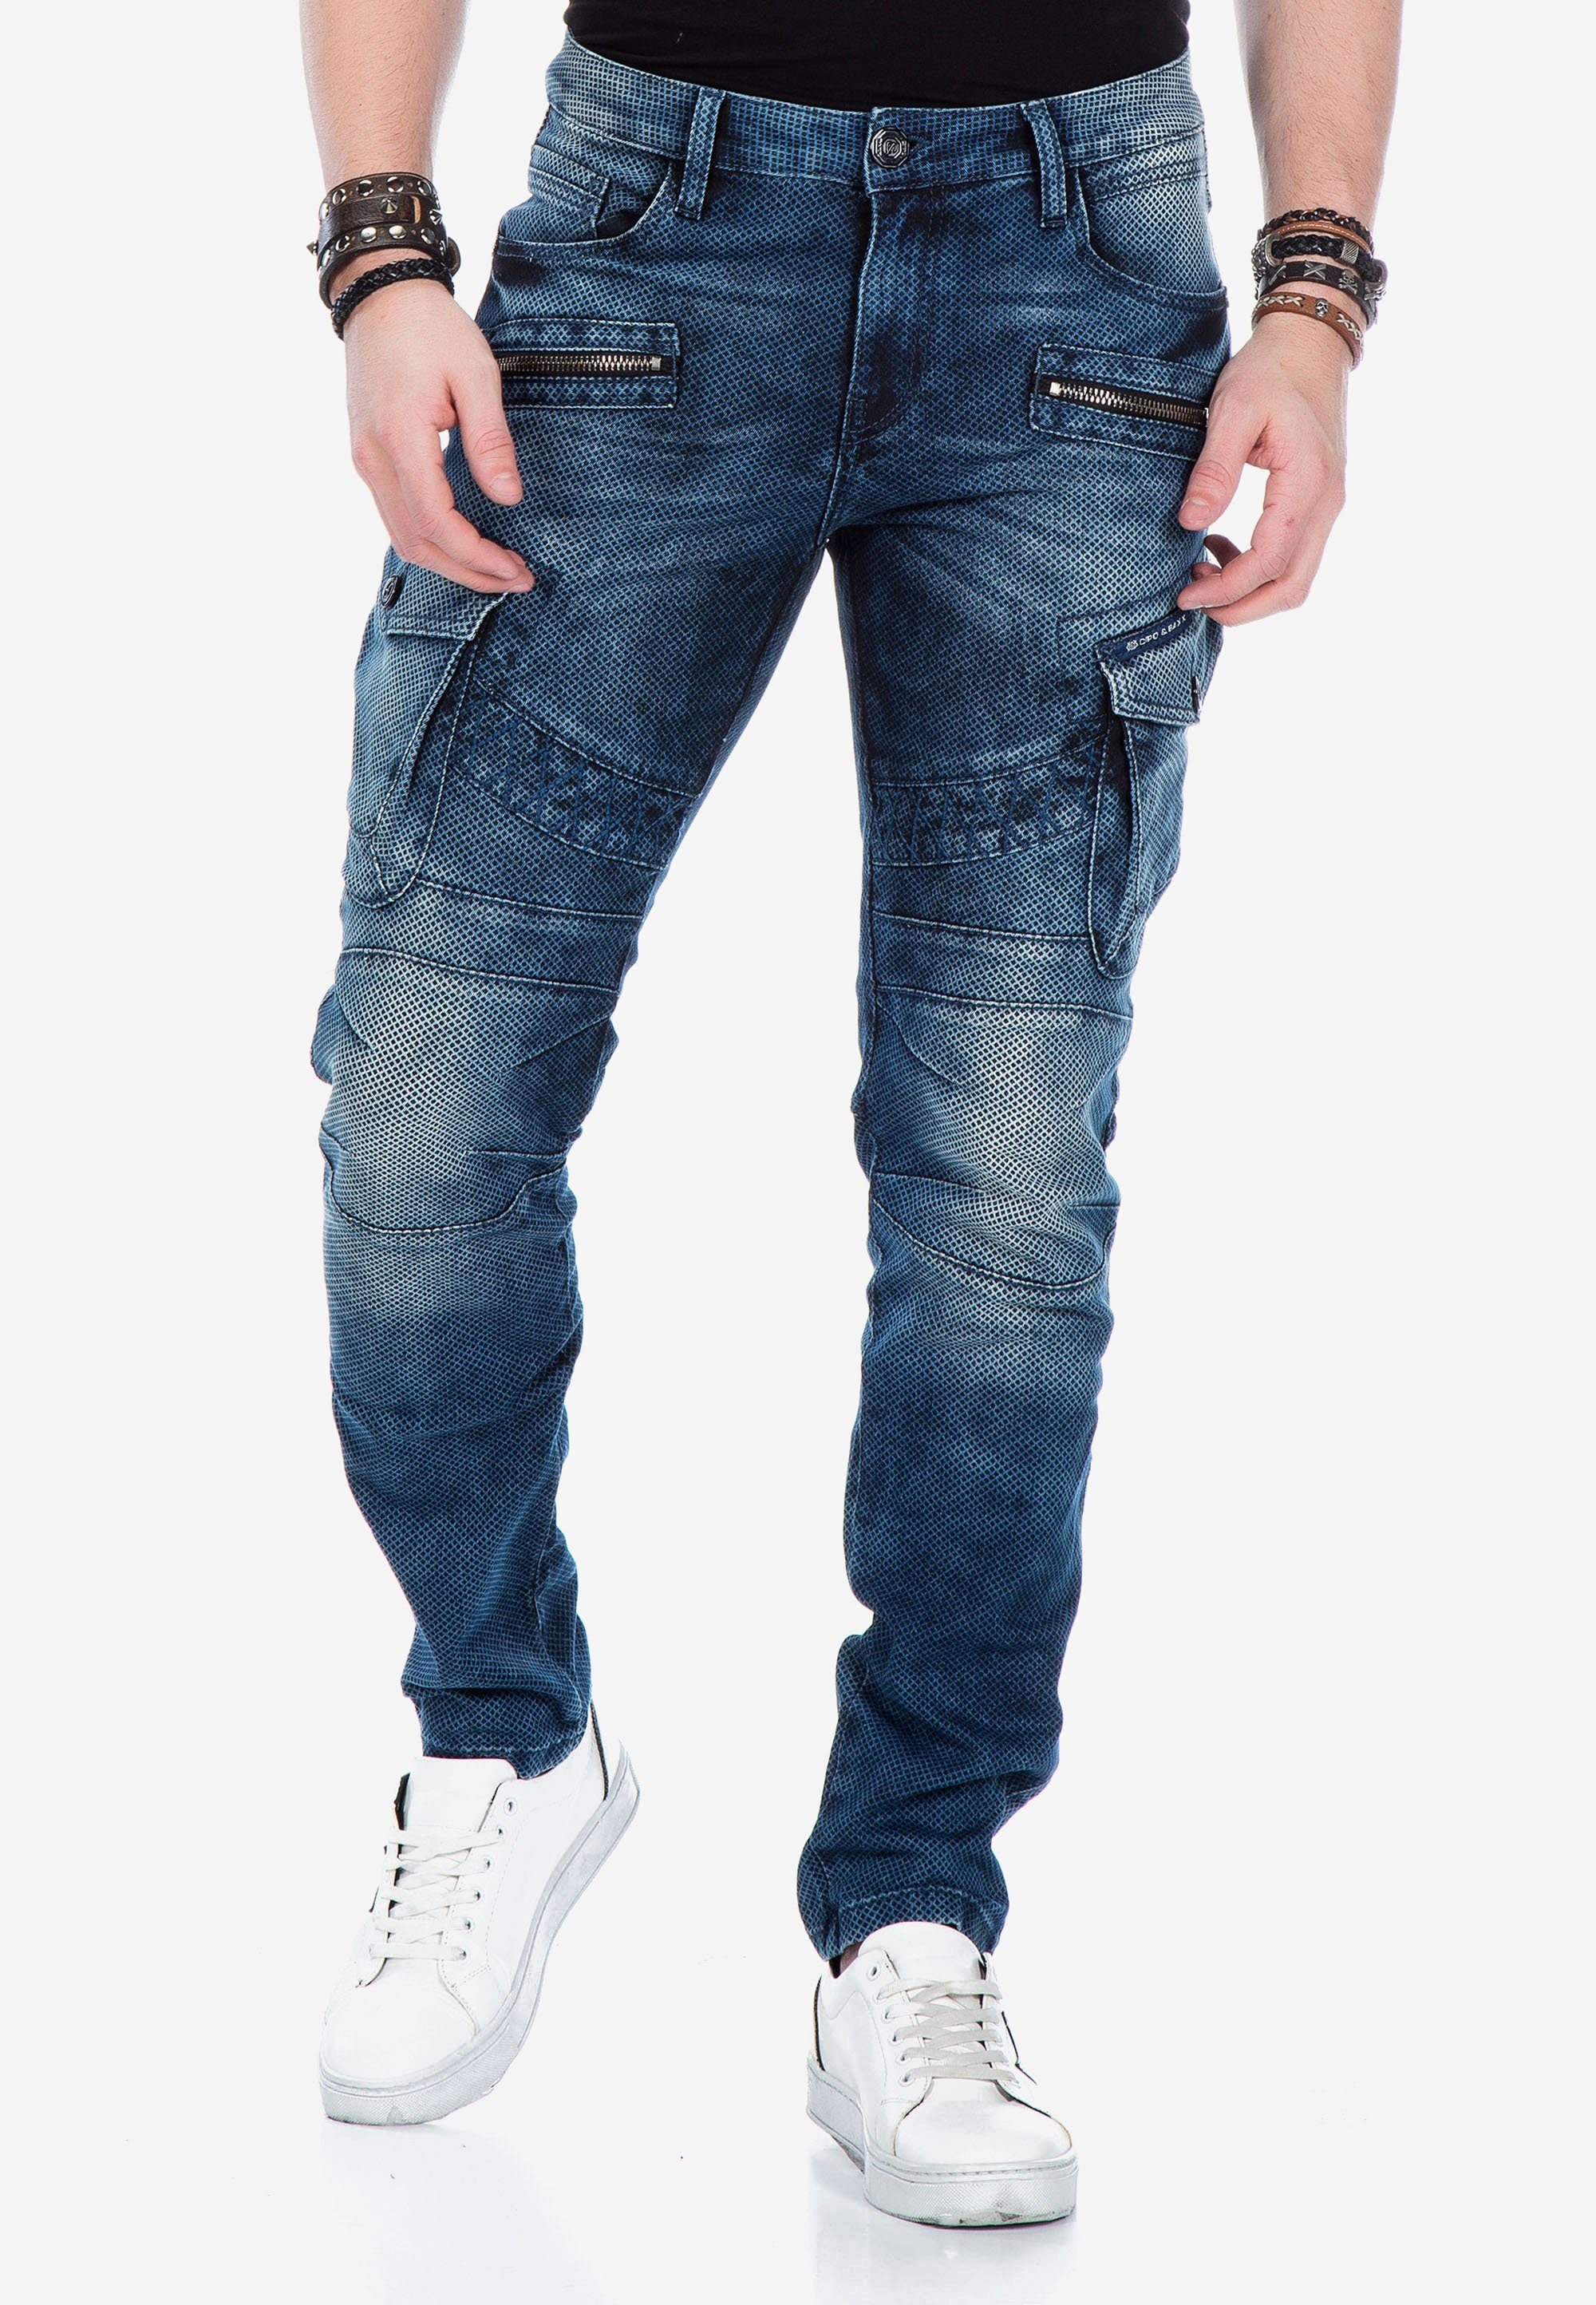 Herren Skinny-Jeans online kaufen | OTTO